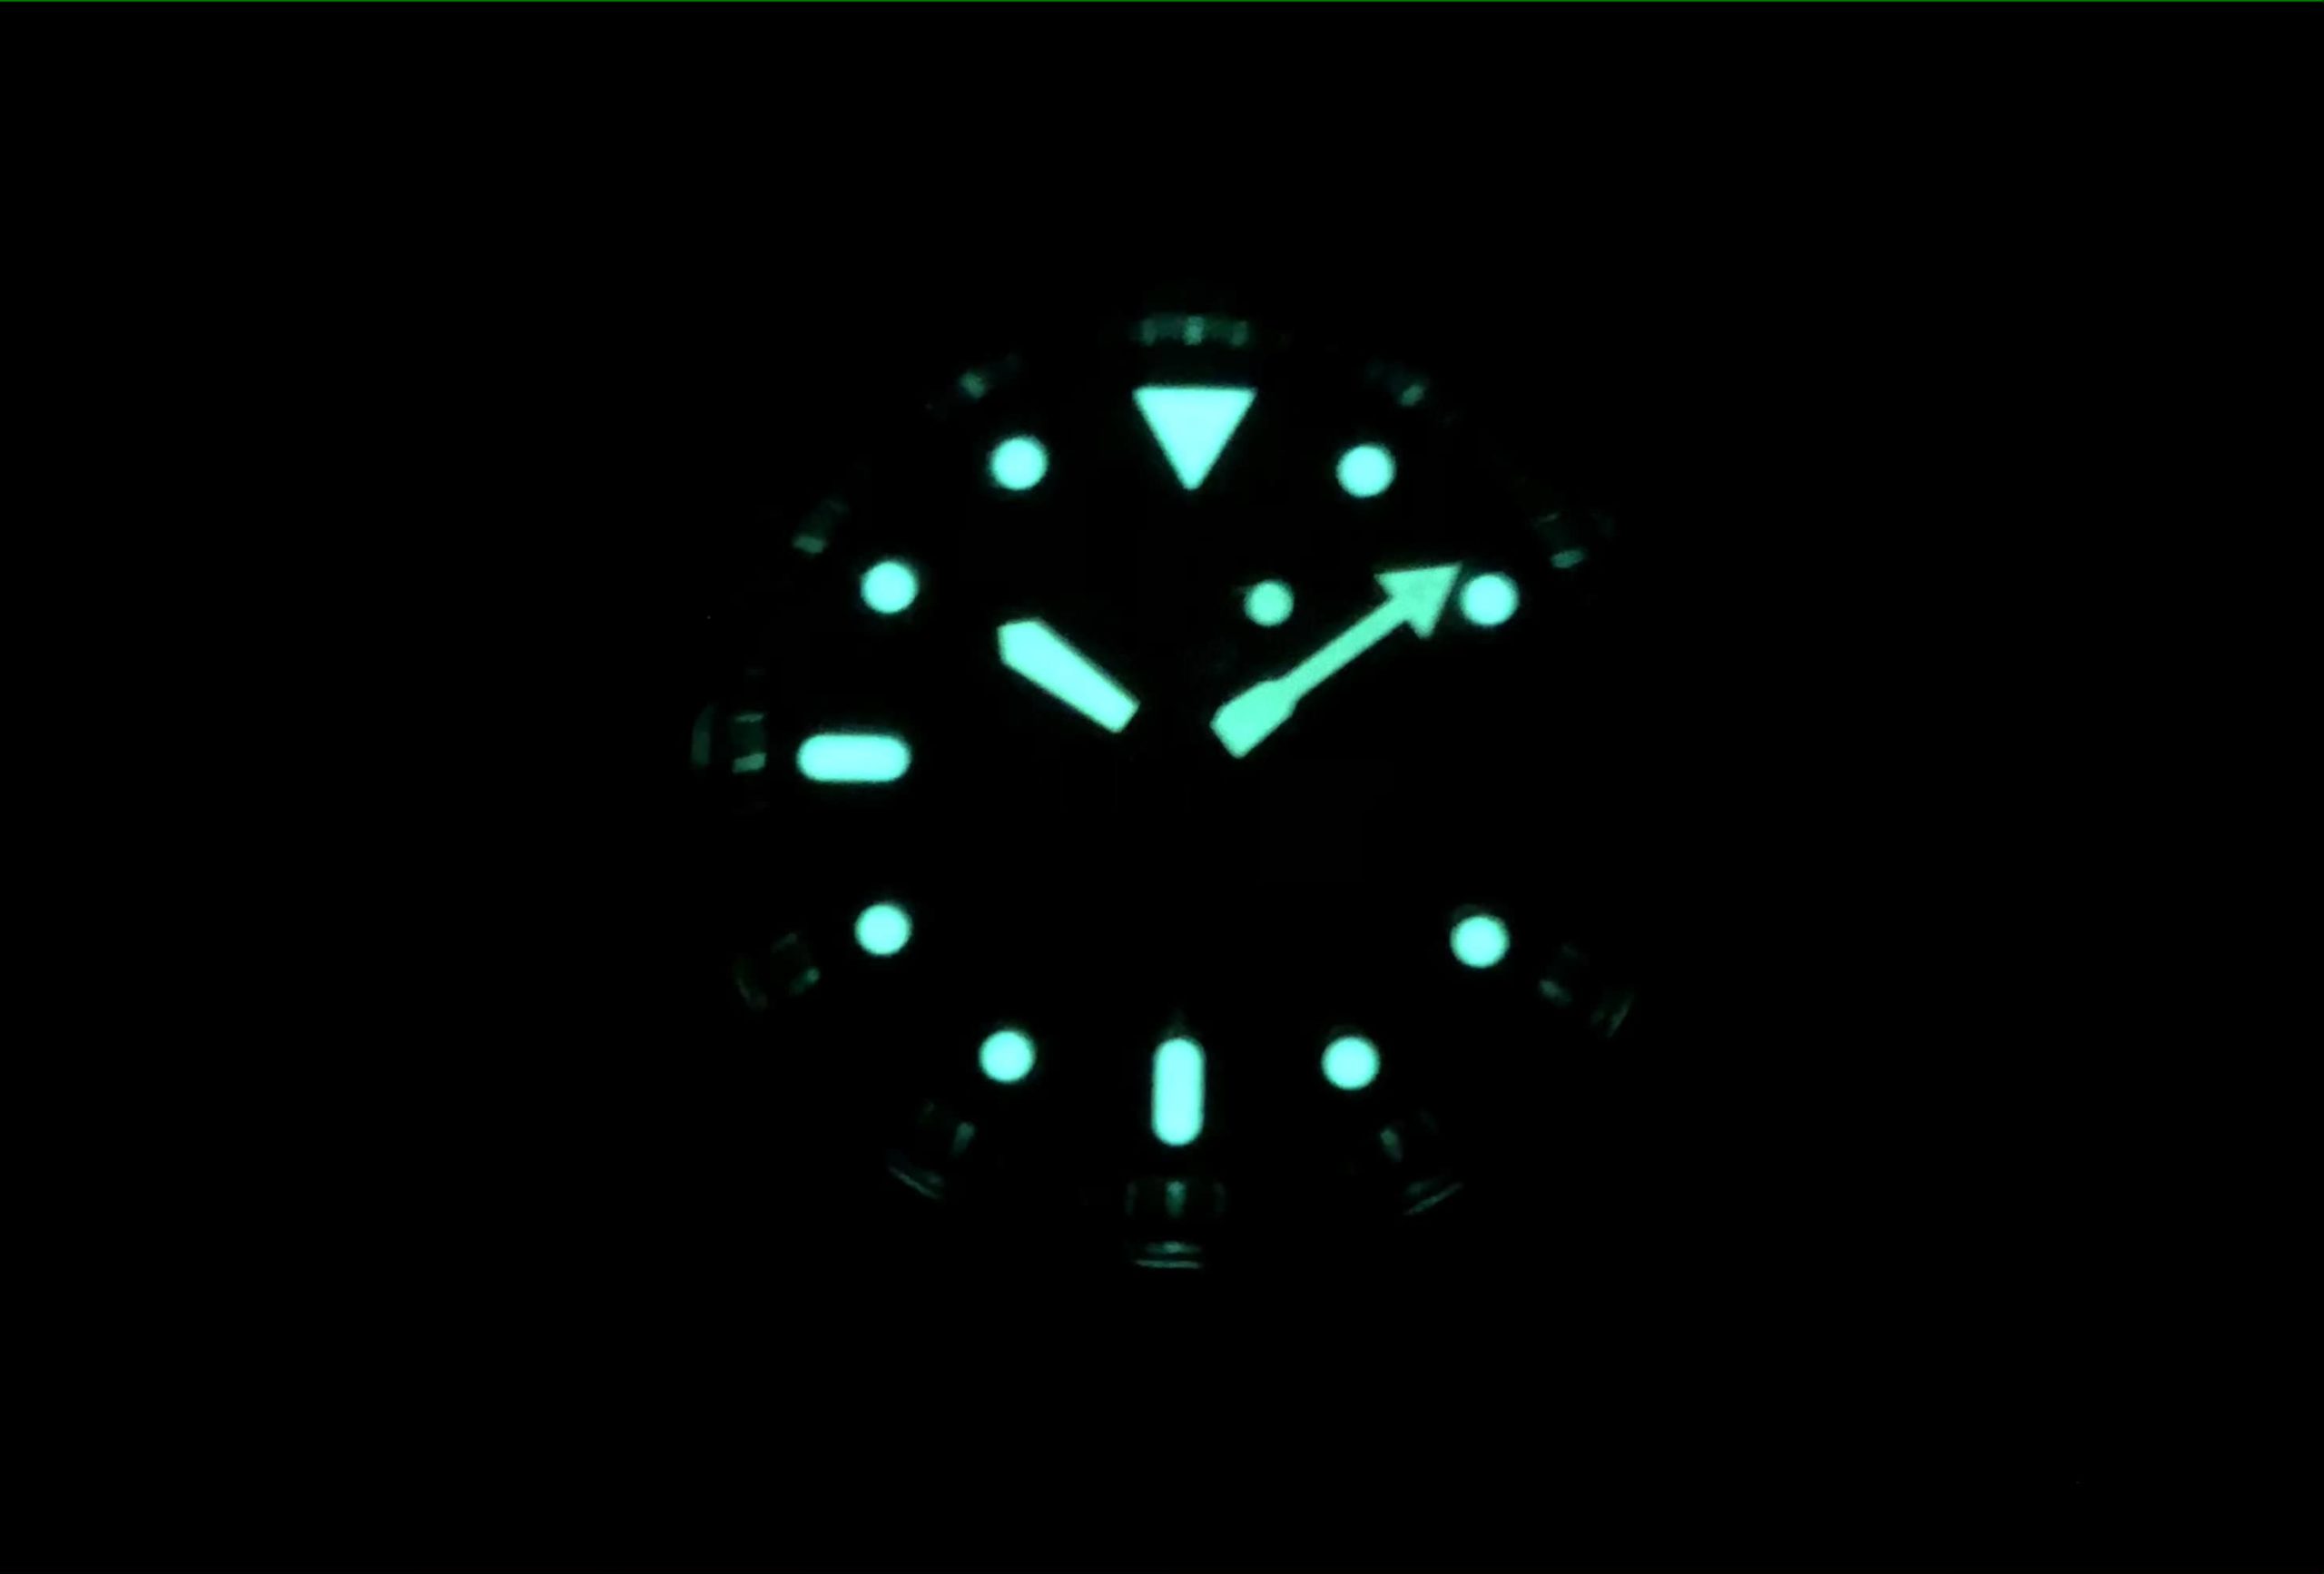 Greenish lume of the Seiko dive watch